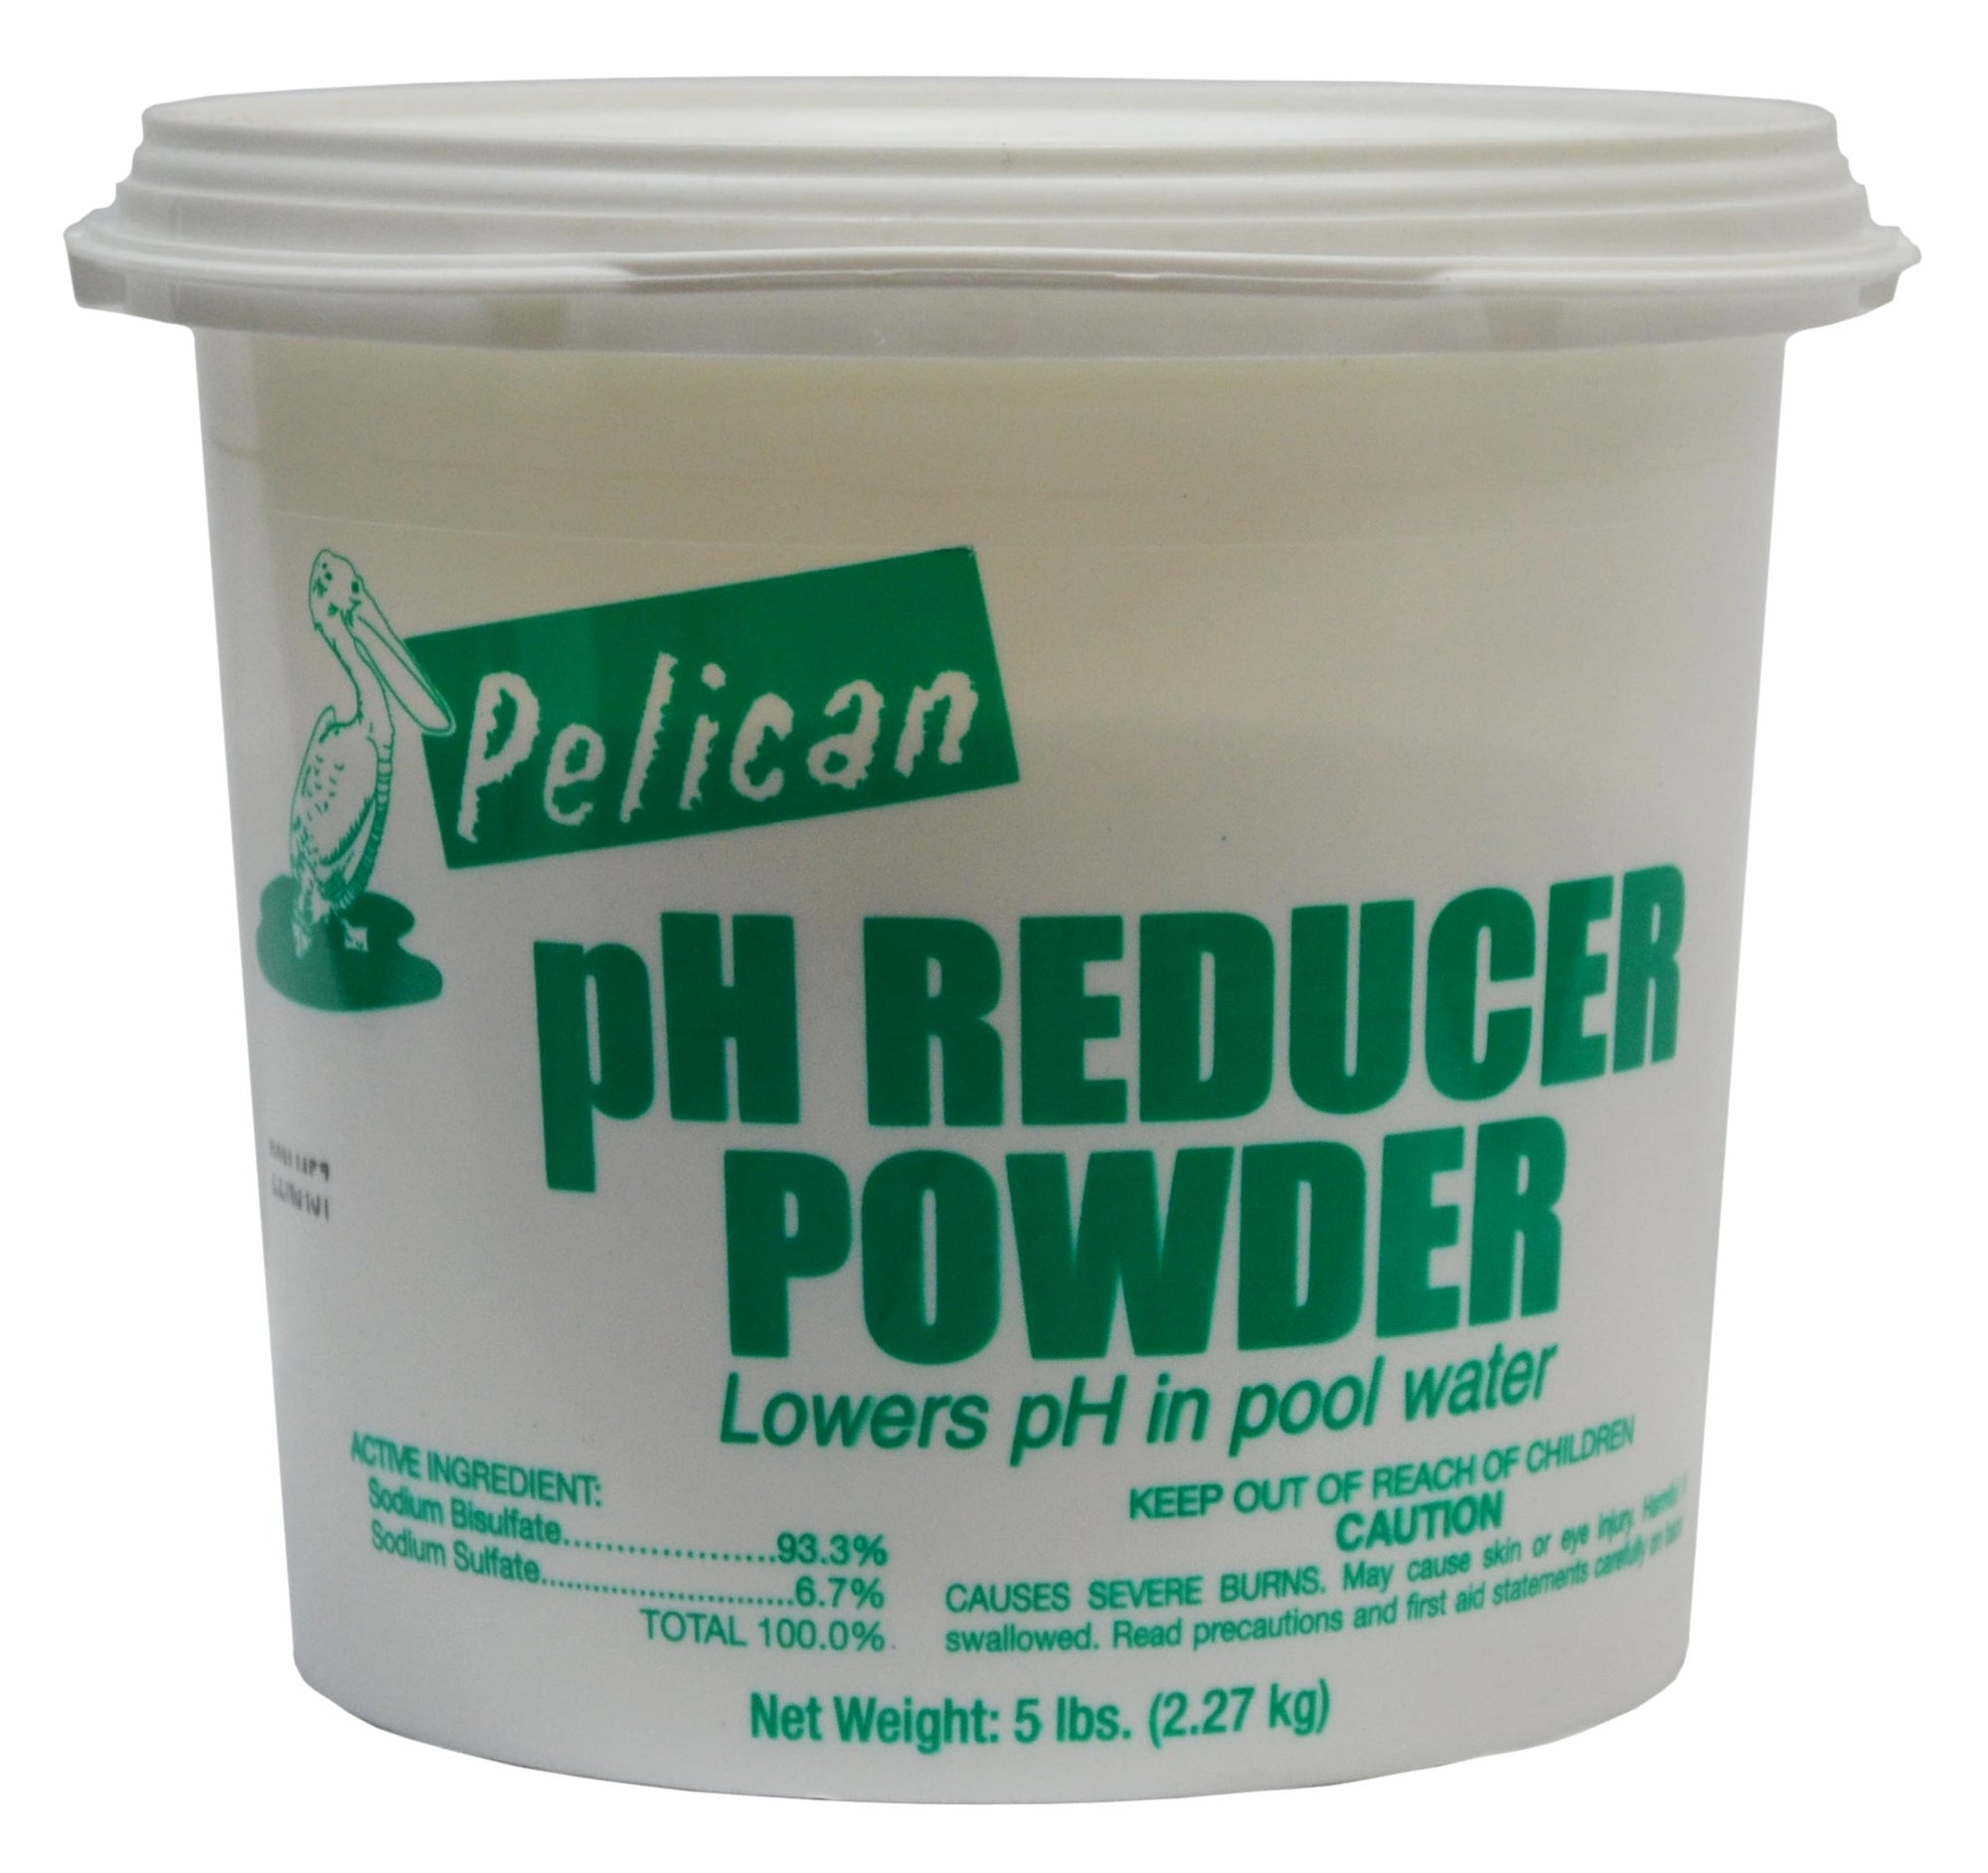 Pelican PH Reducer Powder 5lbs